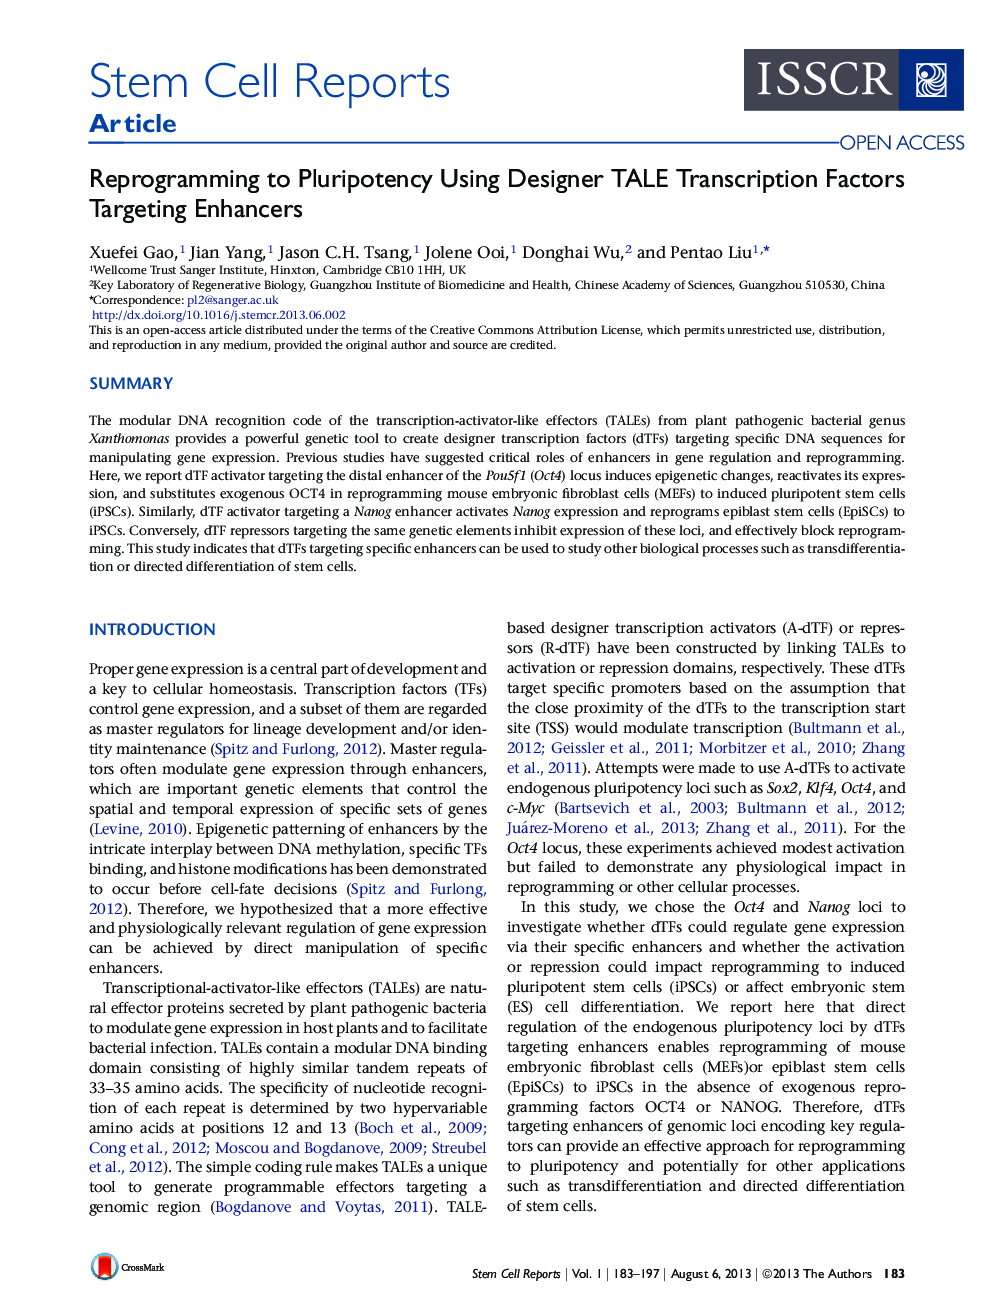 Reprogramming to Pluripotency Using Designer TALE Transcription Factors Targeting Enhancers 